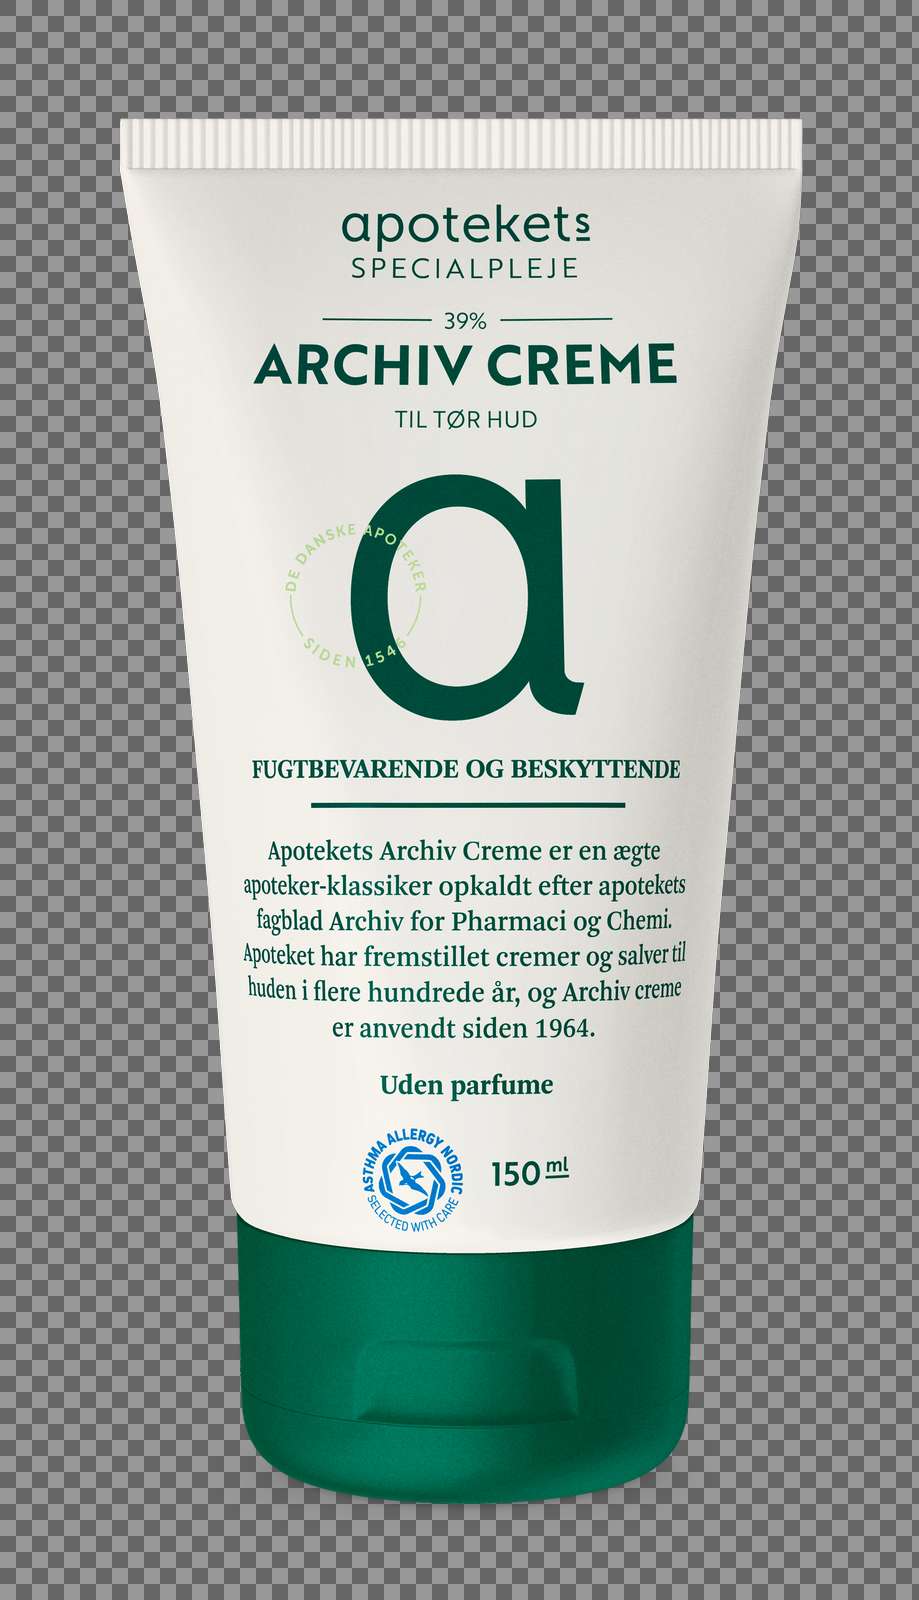 Archiv-creme-150ml-apotekets.psd